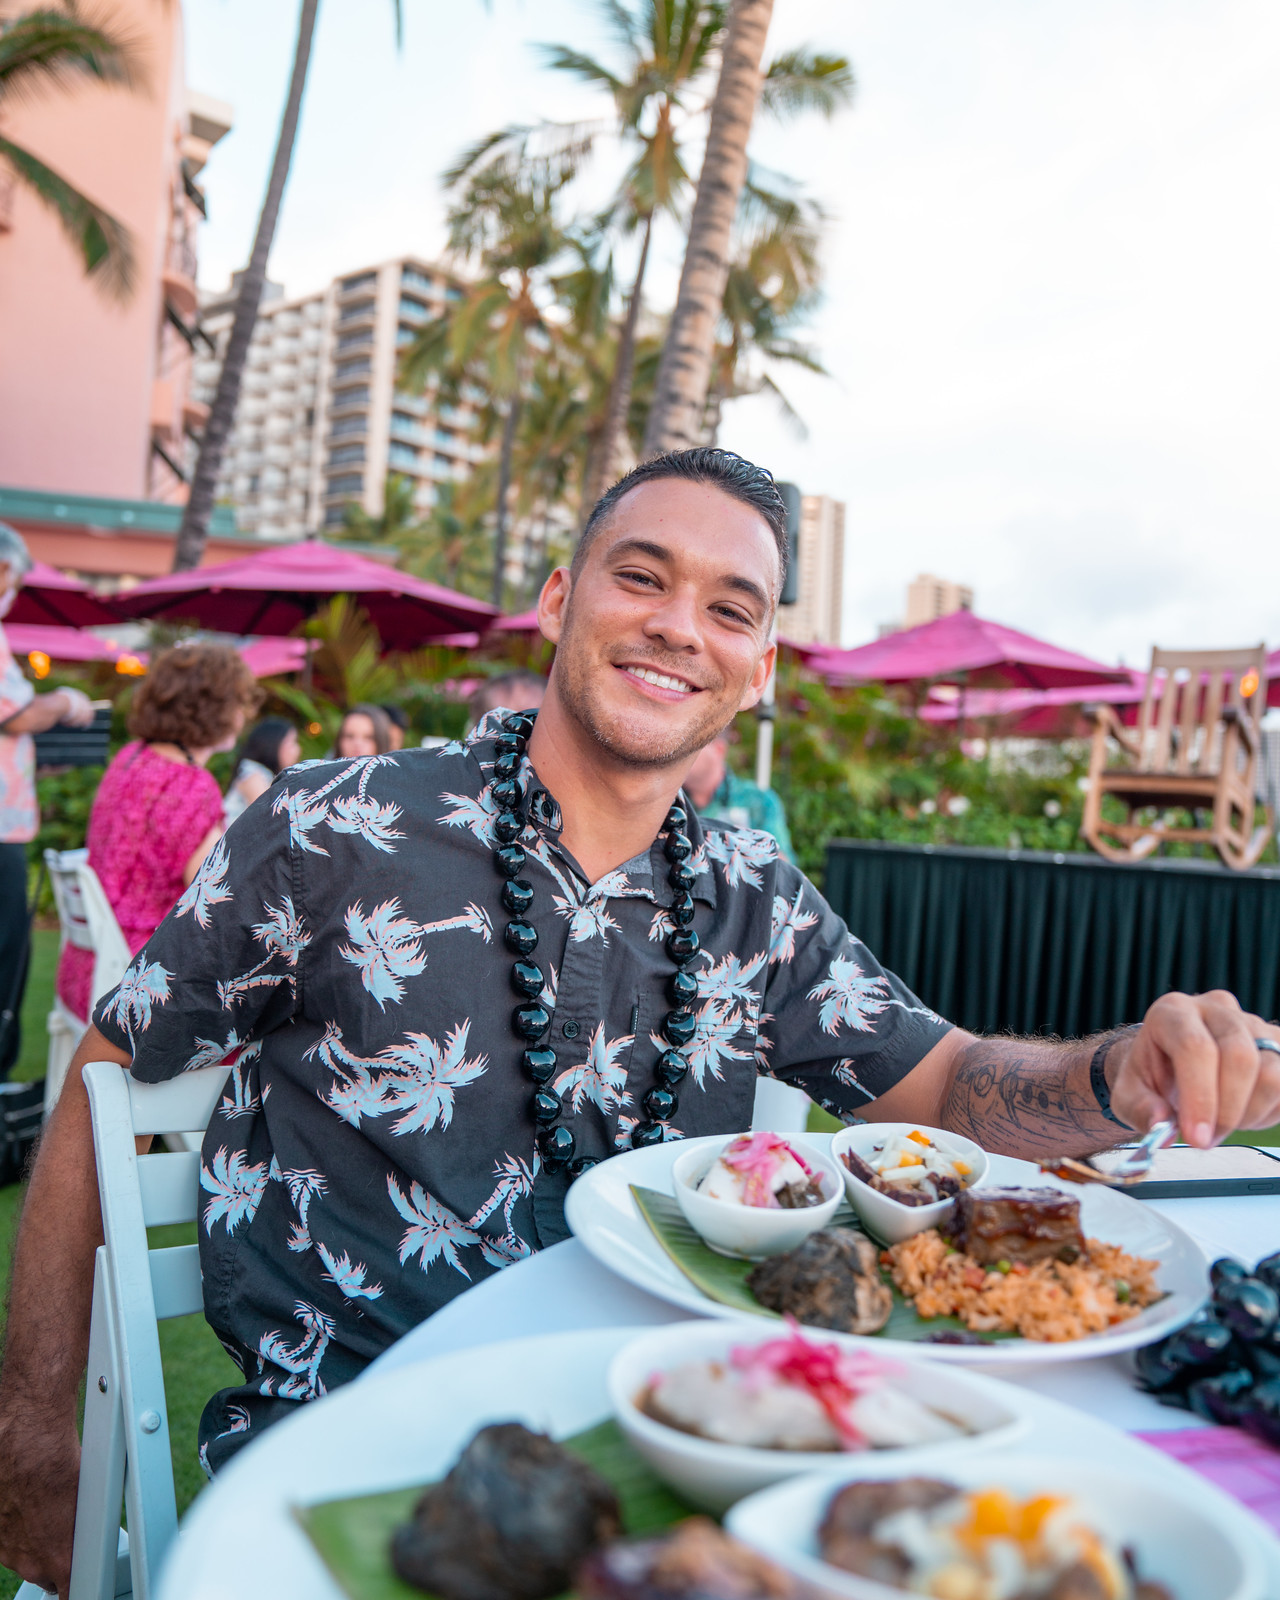 The Royal Hawaiian Resort Waikiki (Pink Palace) - best place to stay waikiki, best place to stay oahu, best place to stay hawaii, best hotel waikiki, best hotel hawaii, best hotel oahu, pink hotel, where to stay in hawaii, where to stay waikiki, hawaii travel, oahu travel, hawaii, waikiki, oahu, hawaii blog, oahu blog, hawaii blogger